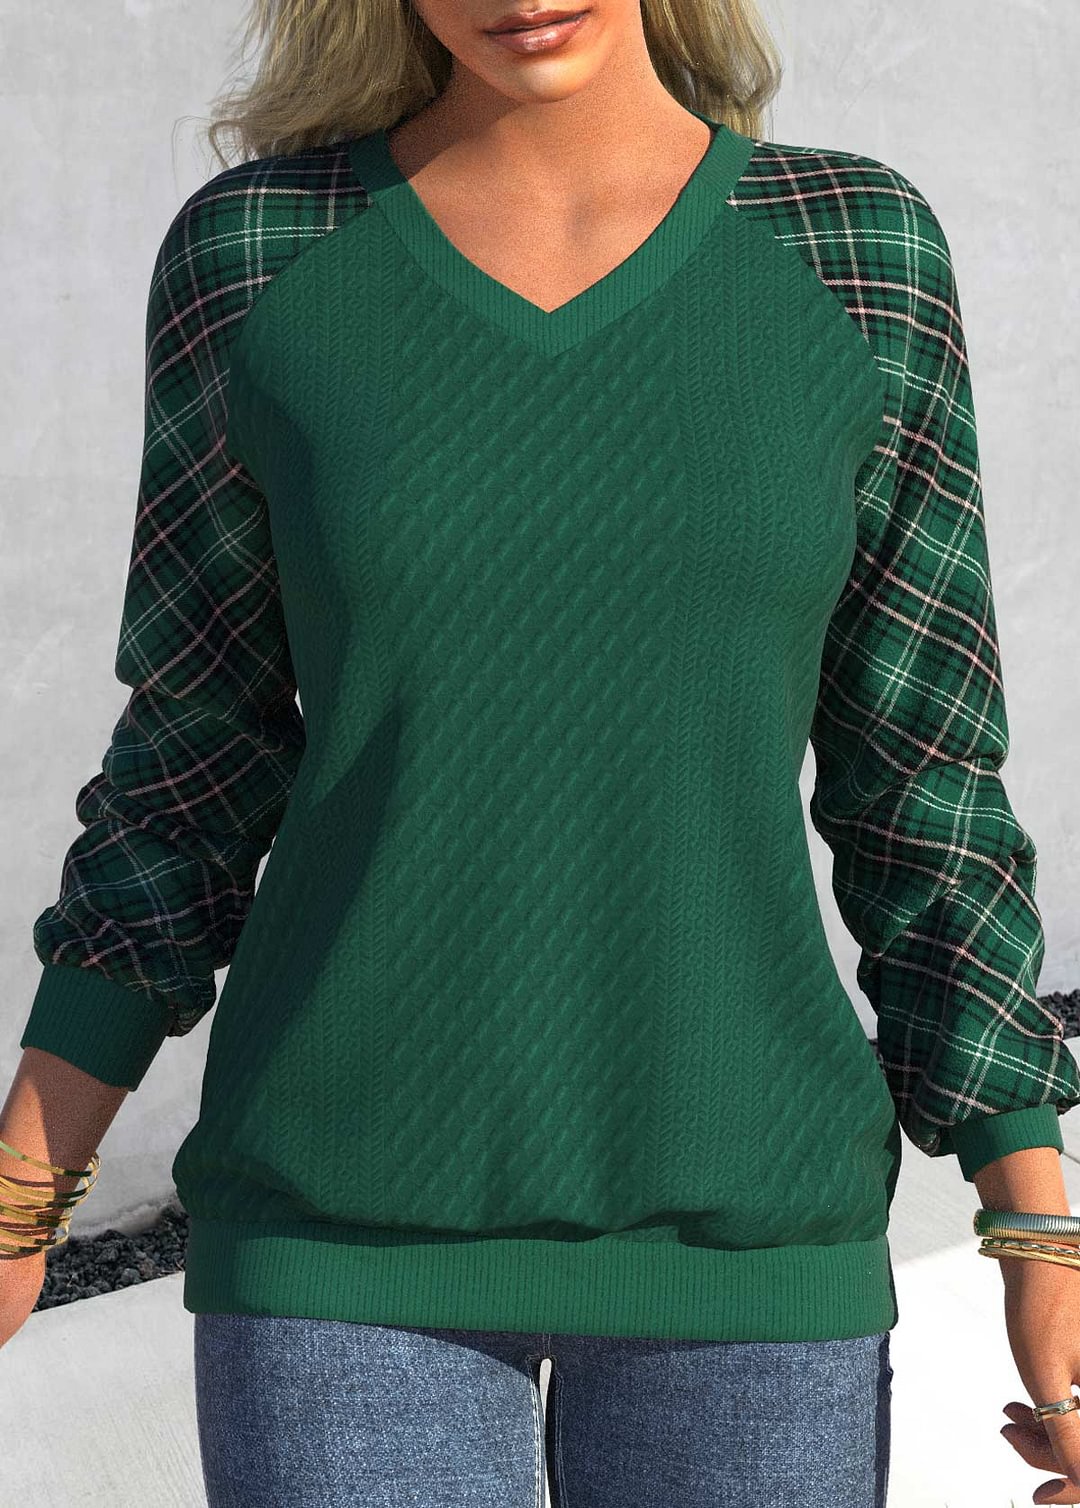 Green Plaid Women's Casual Sweatshirt